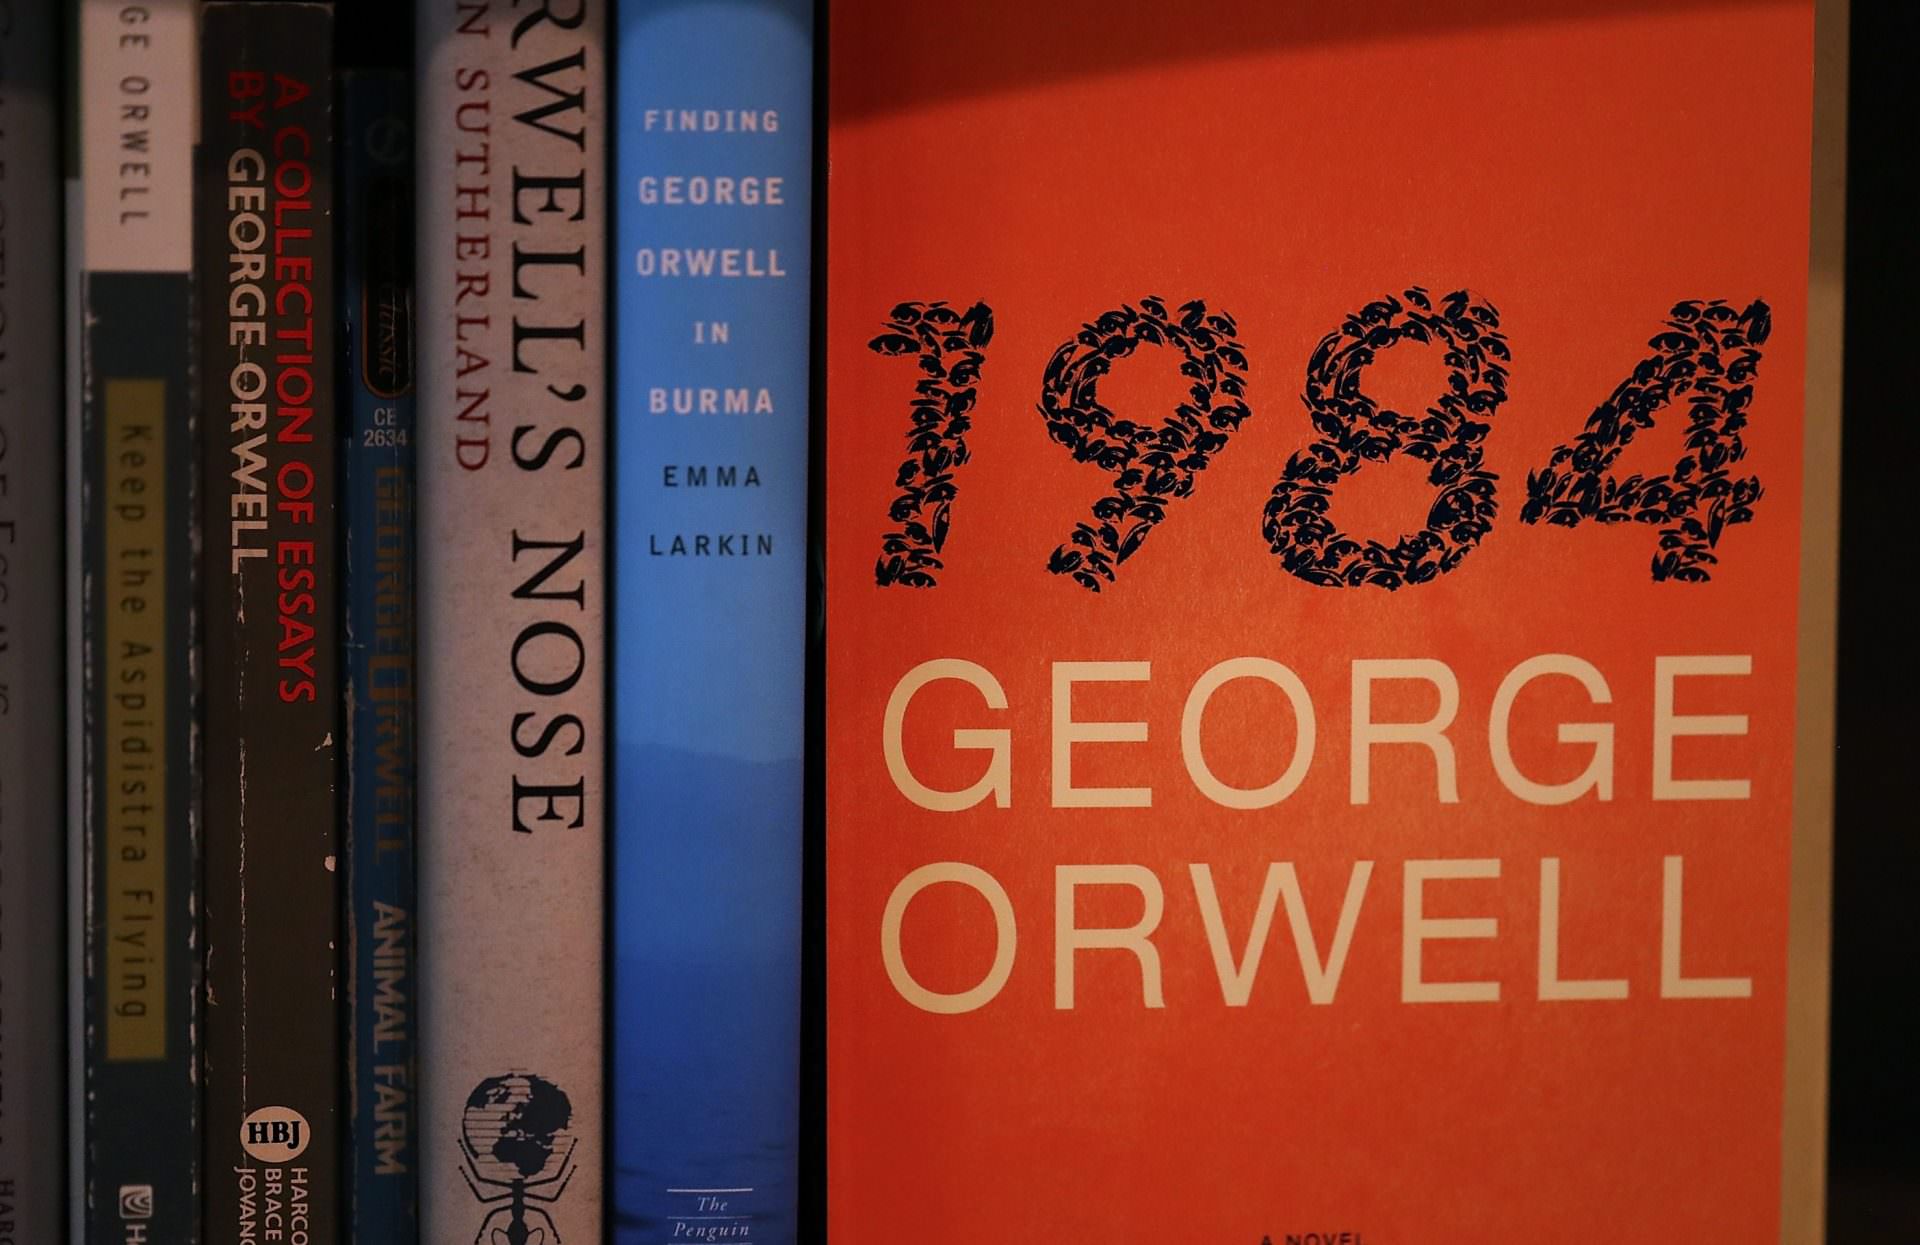 1984 джордж оруэлл книга содержание. Оруэлл 1984 книга. Джордж Оруэлл 1984 год.